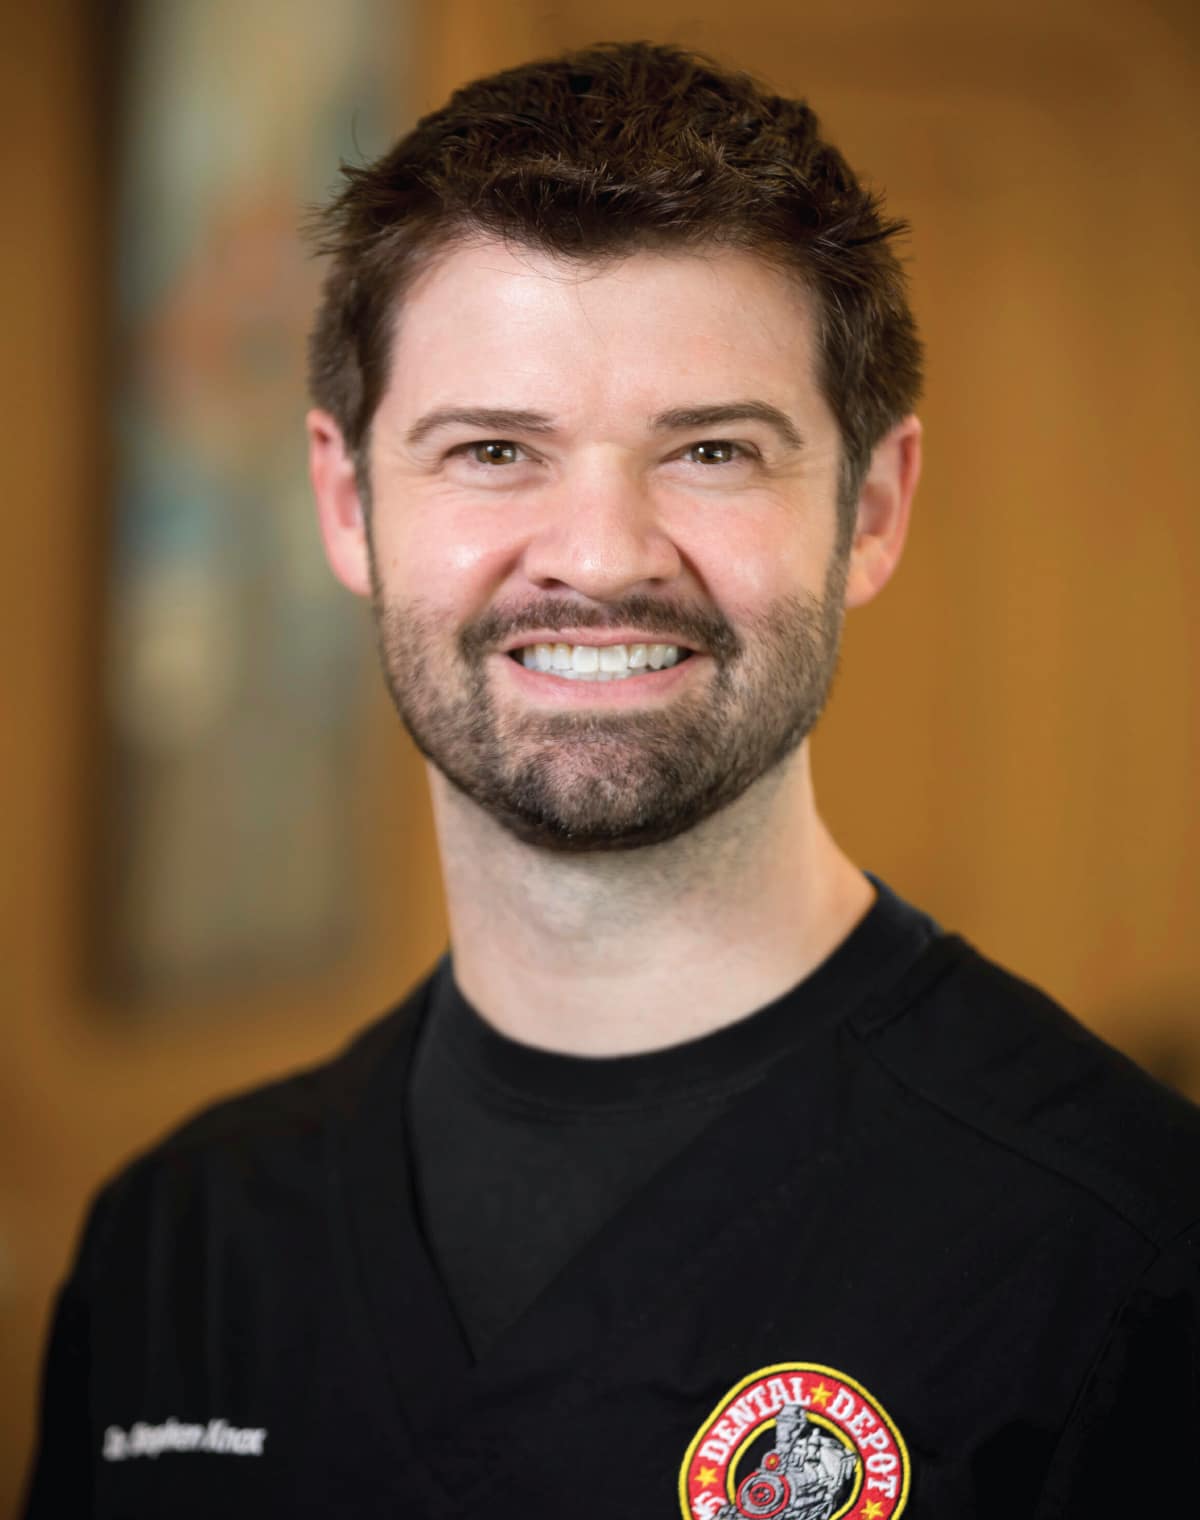 Dr. Stephen Knox of dental depot central tulsa